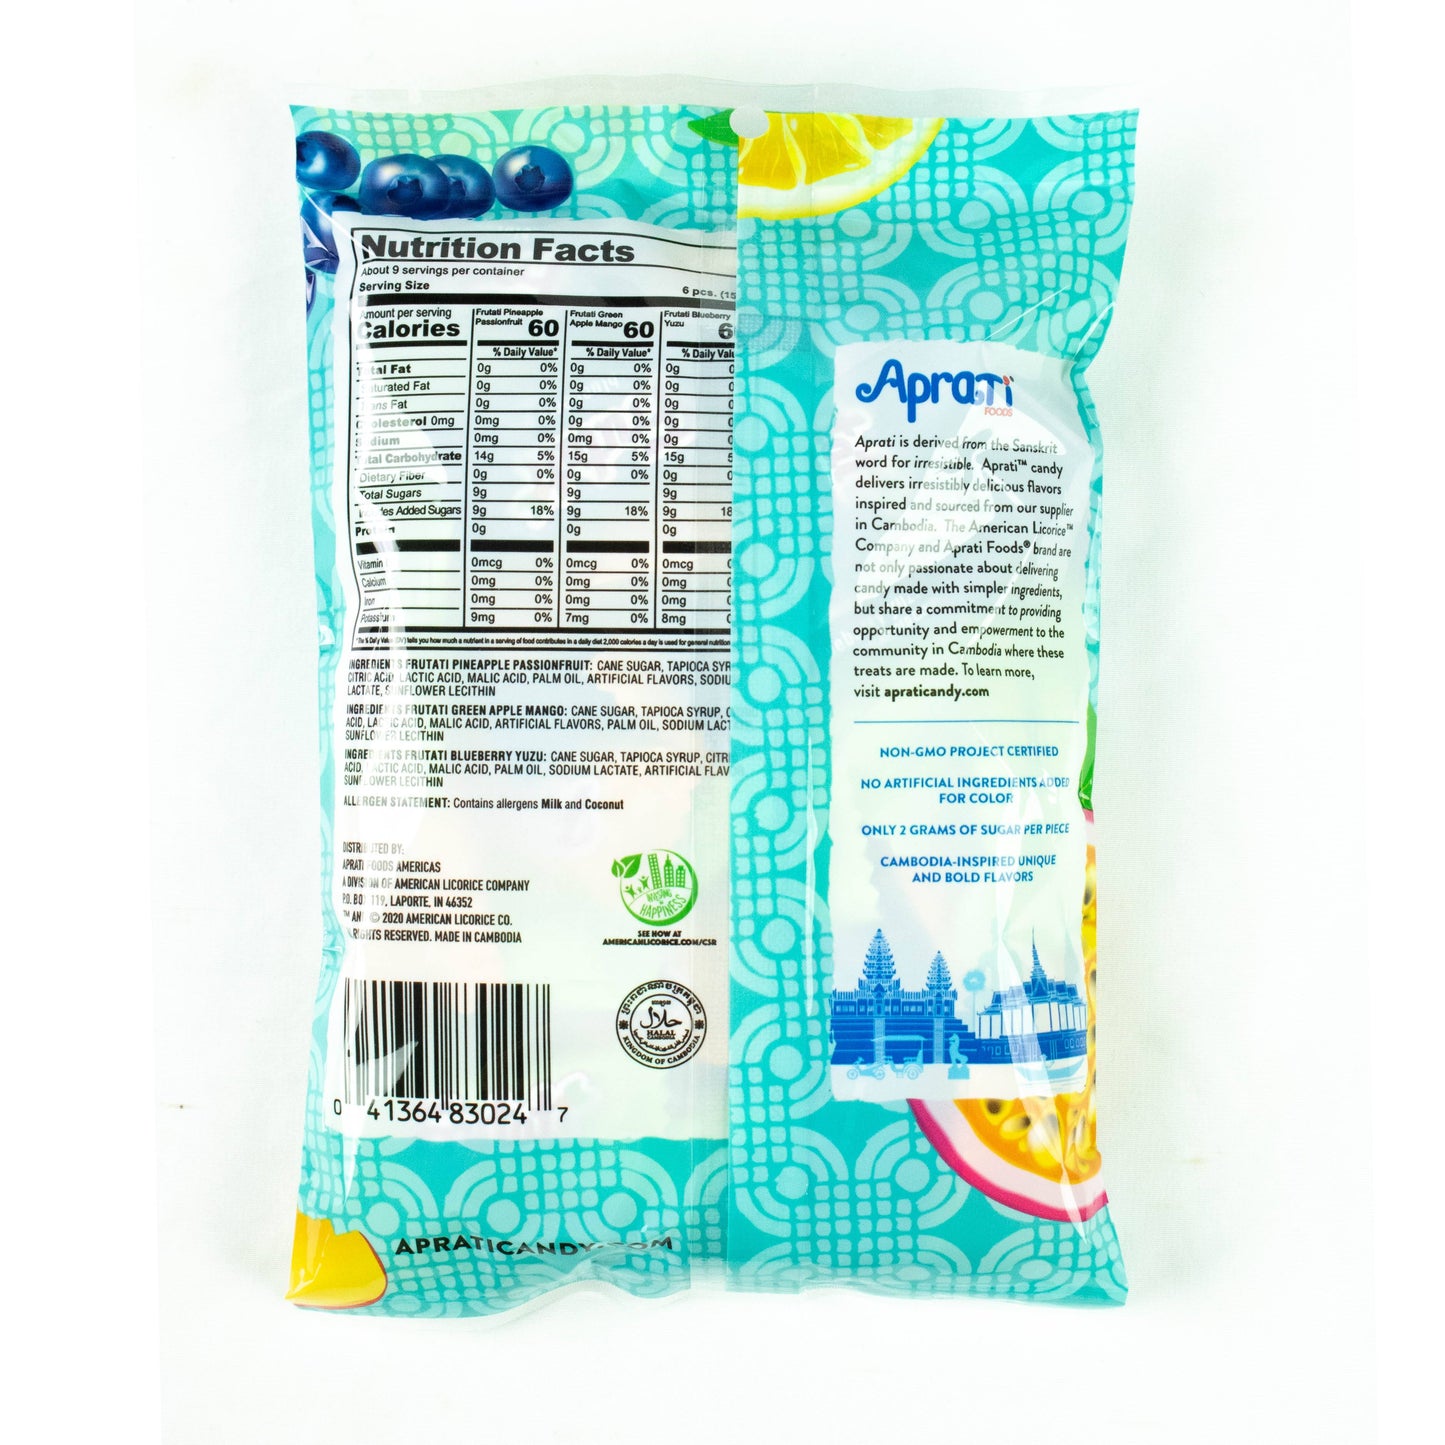 APRATI® FRUTATI® Assorted Fruit Hard Candy, 4.5oz Hanging Bag, 12-Count